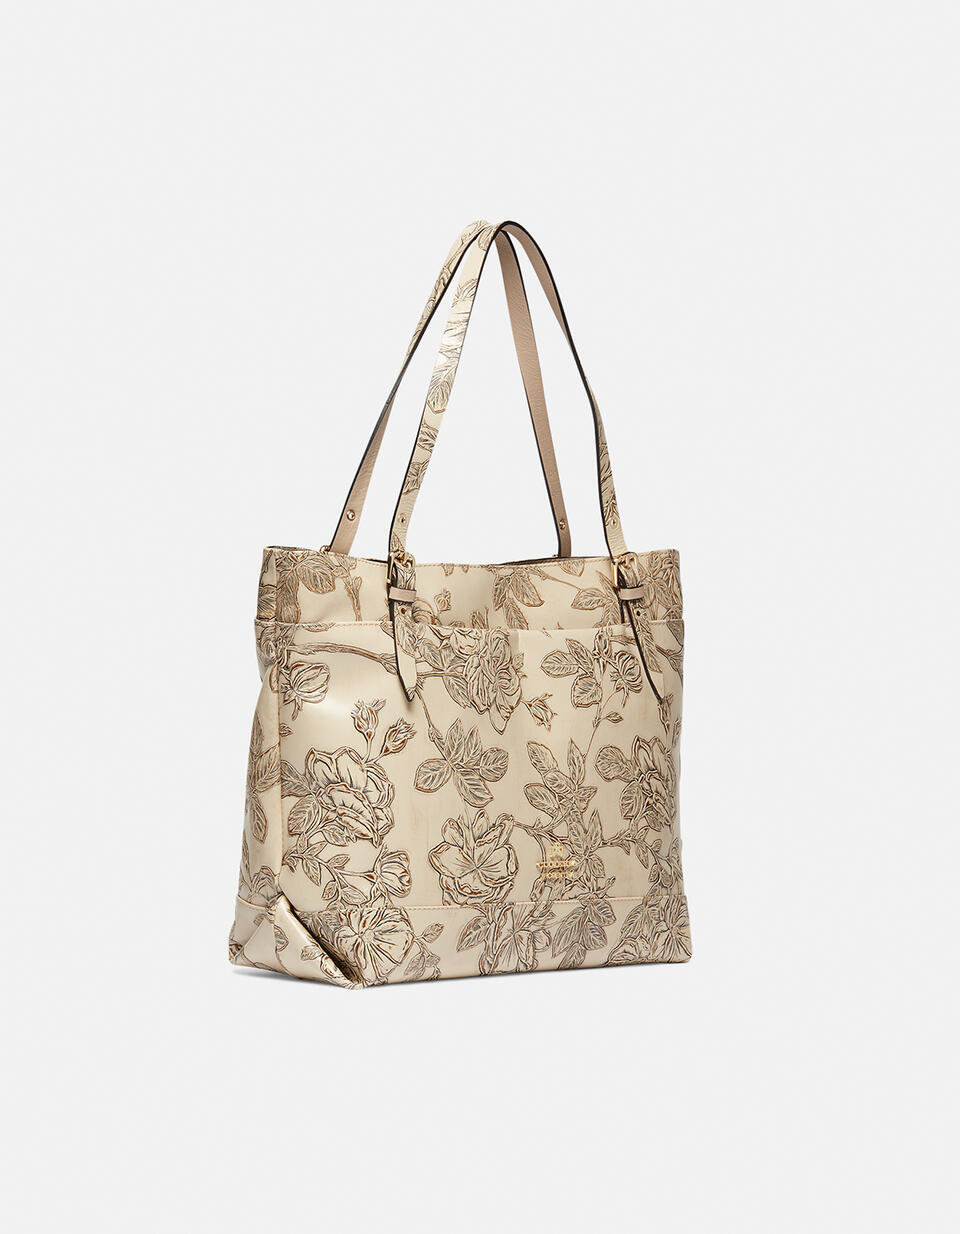 Big Mimì shopping bag keystone design - SHOPPING - WOMEN'S BAGS | bags Mimì TAUPE - SHOPPING - WOMEN'S BAGS | bagsCuoieria Fiorentina